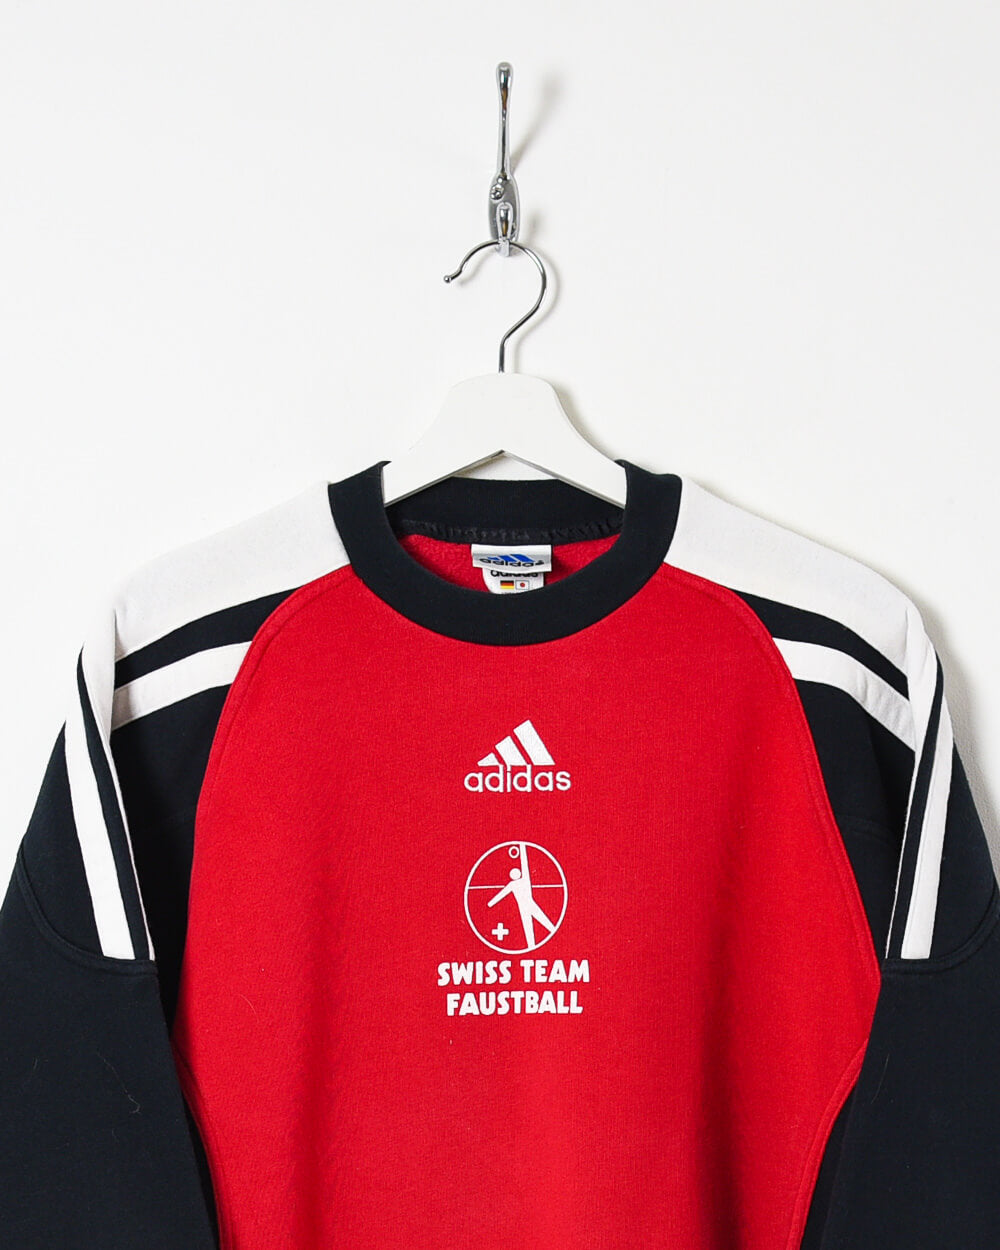 Red Adidas Swiss Team Faustball Sweatshirt - Medium